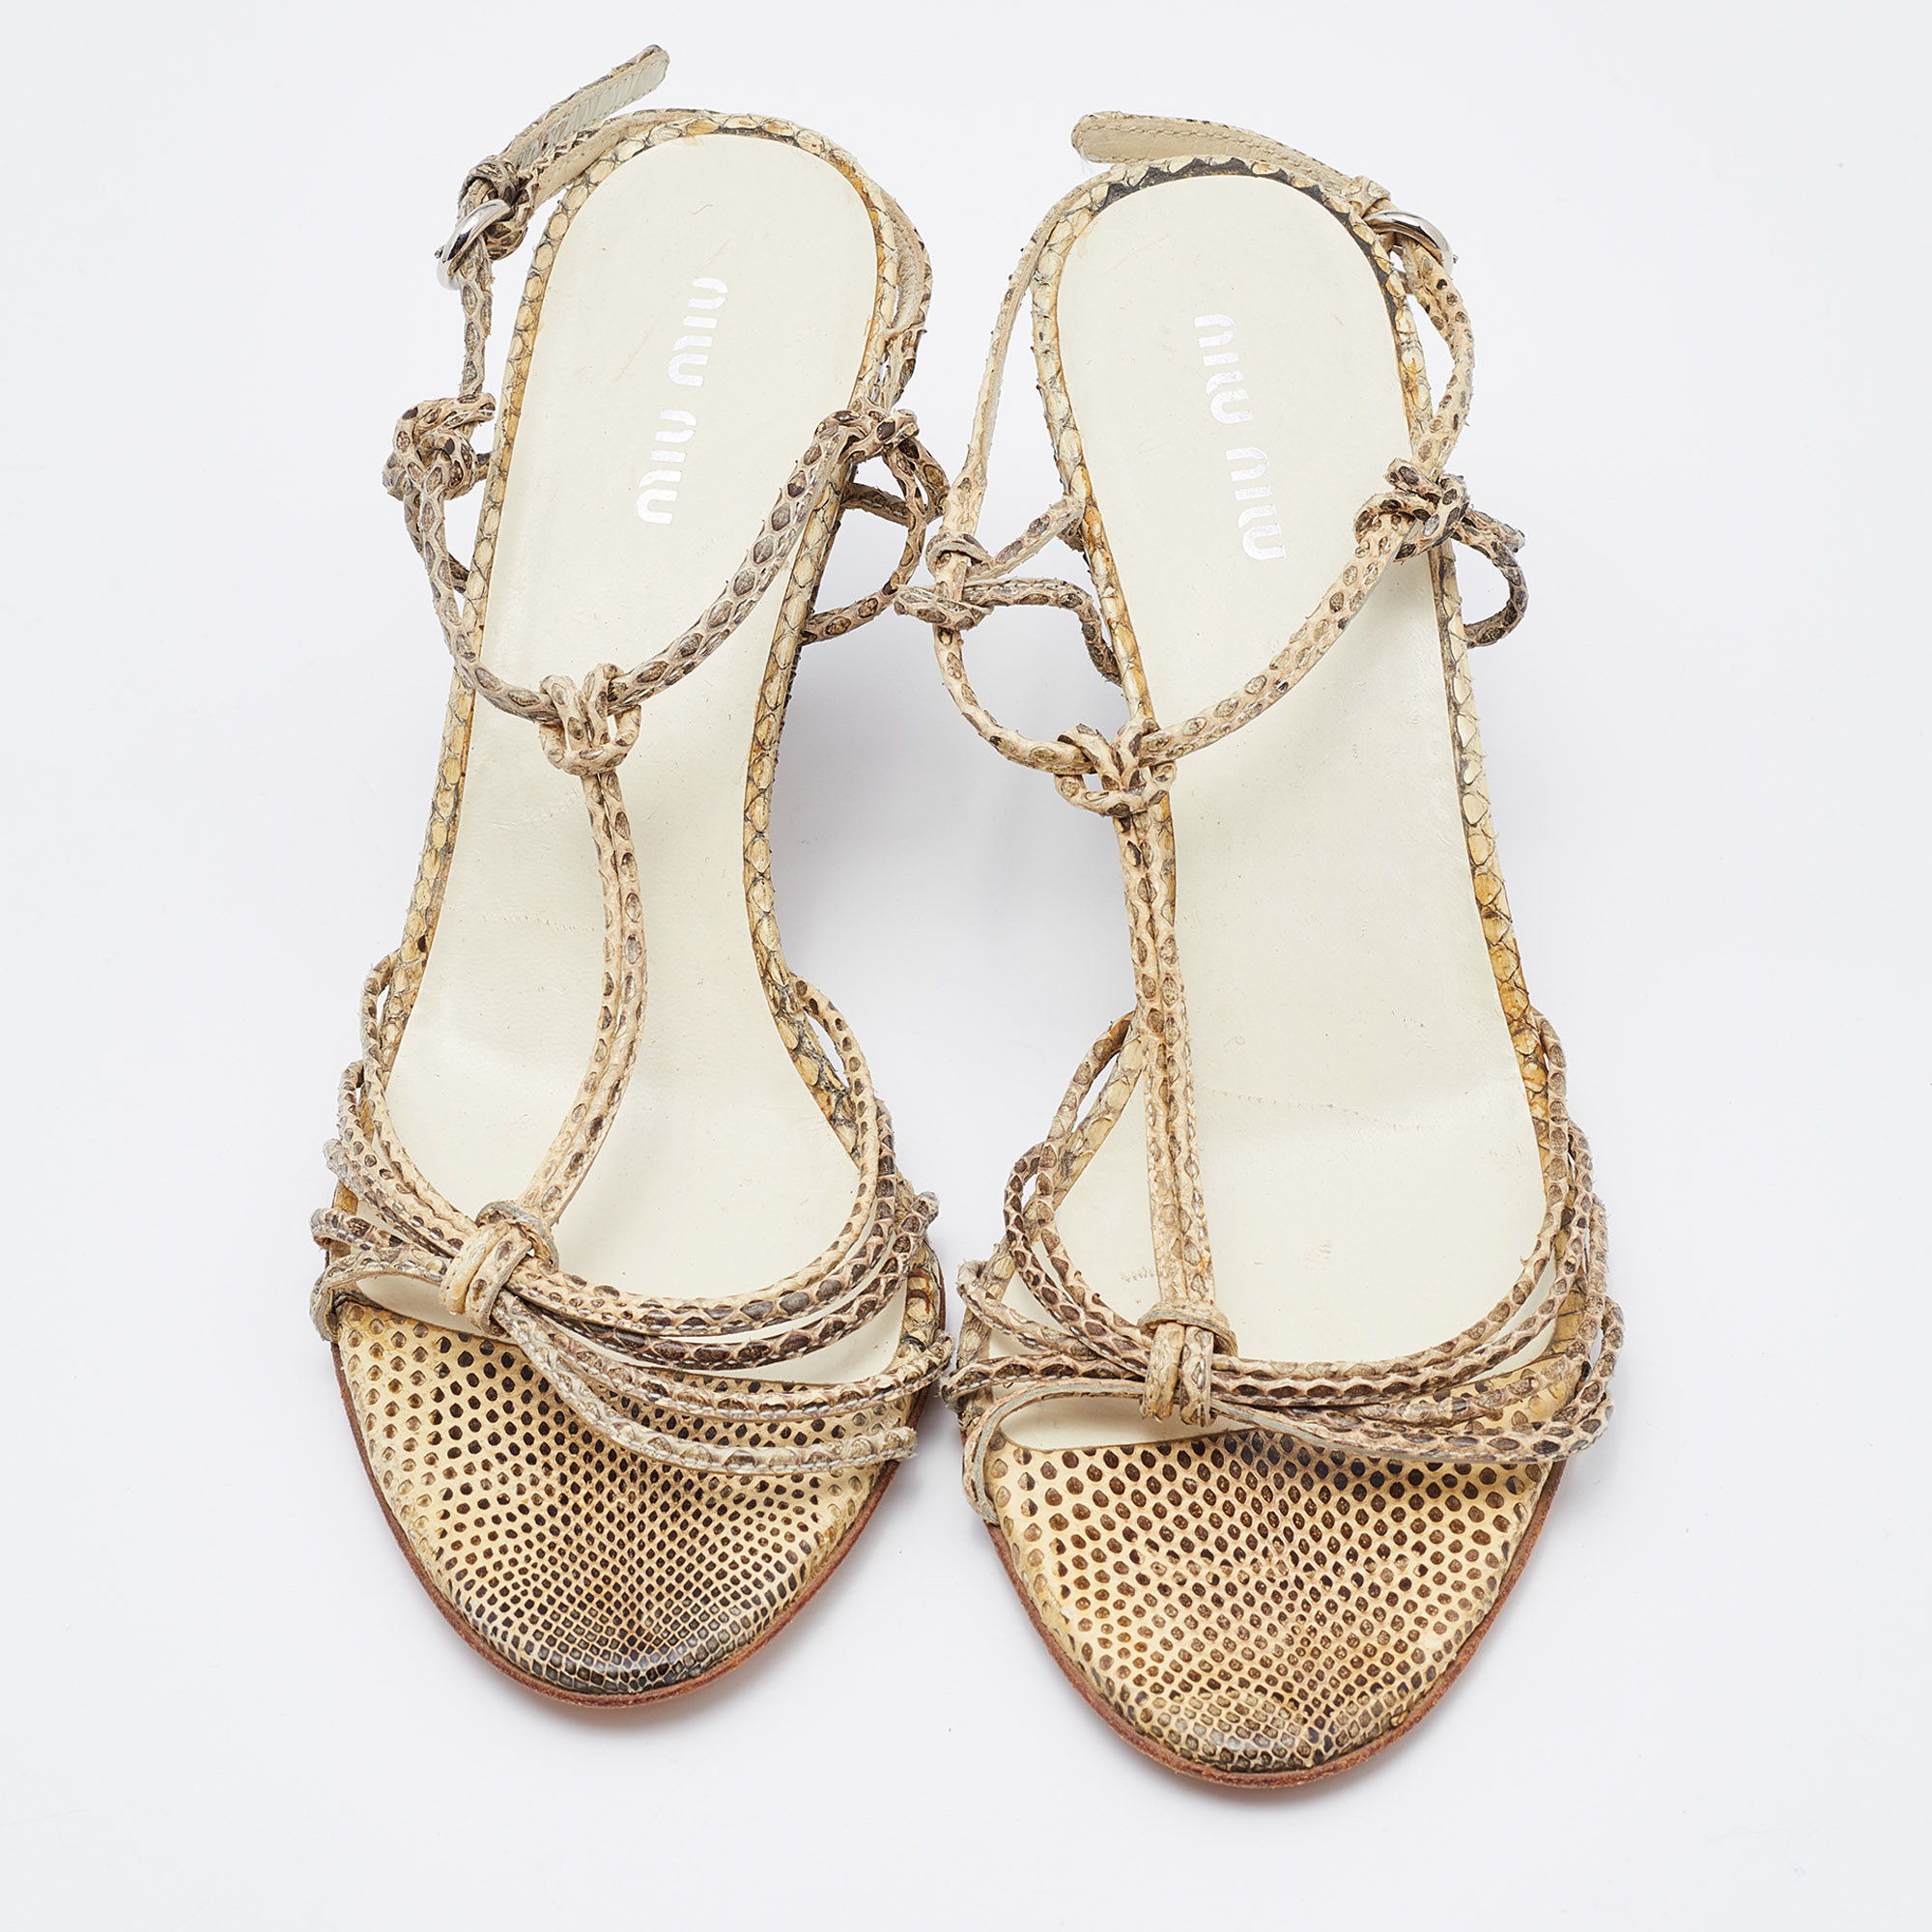 Miu Miu Cream/Brown Snakeskin Leather Strappy Wedge Sandals Size 37